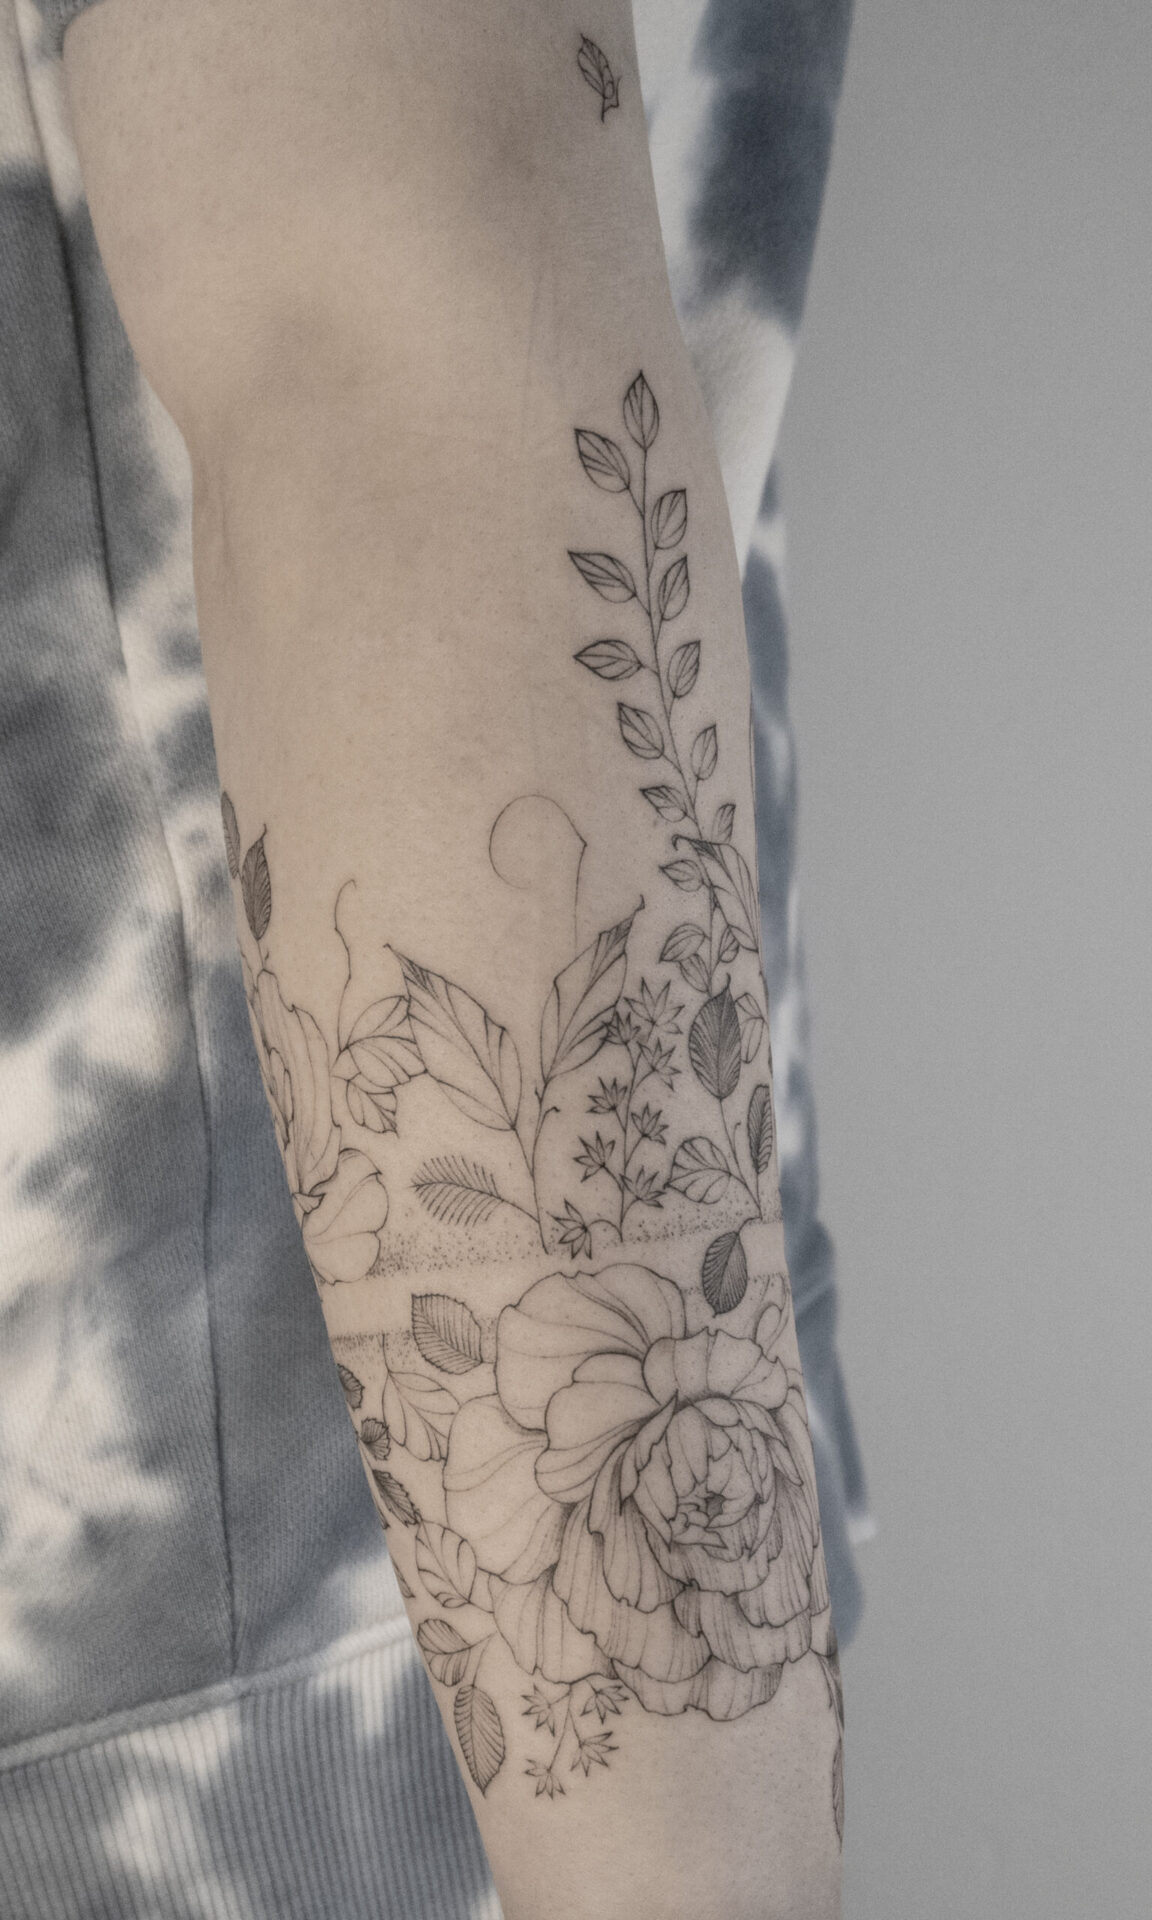 forearm fineline flower half sleeve tattoo with peony from smasli ink an female tattoo artist working in salzburg austria